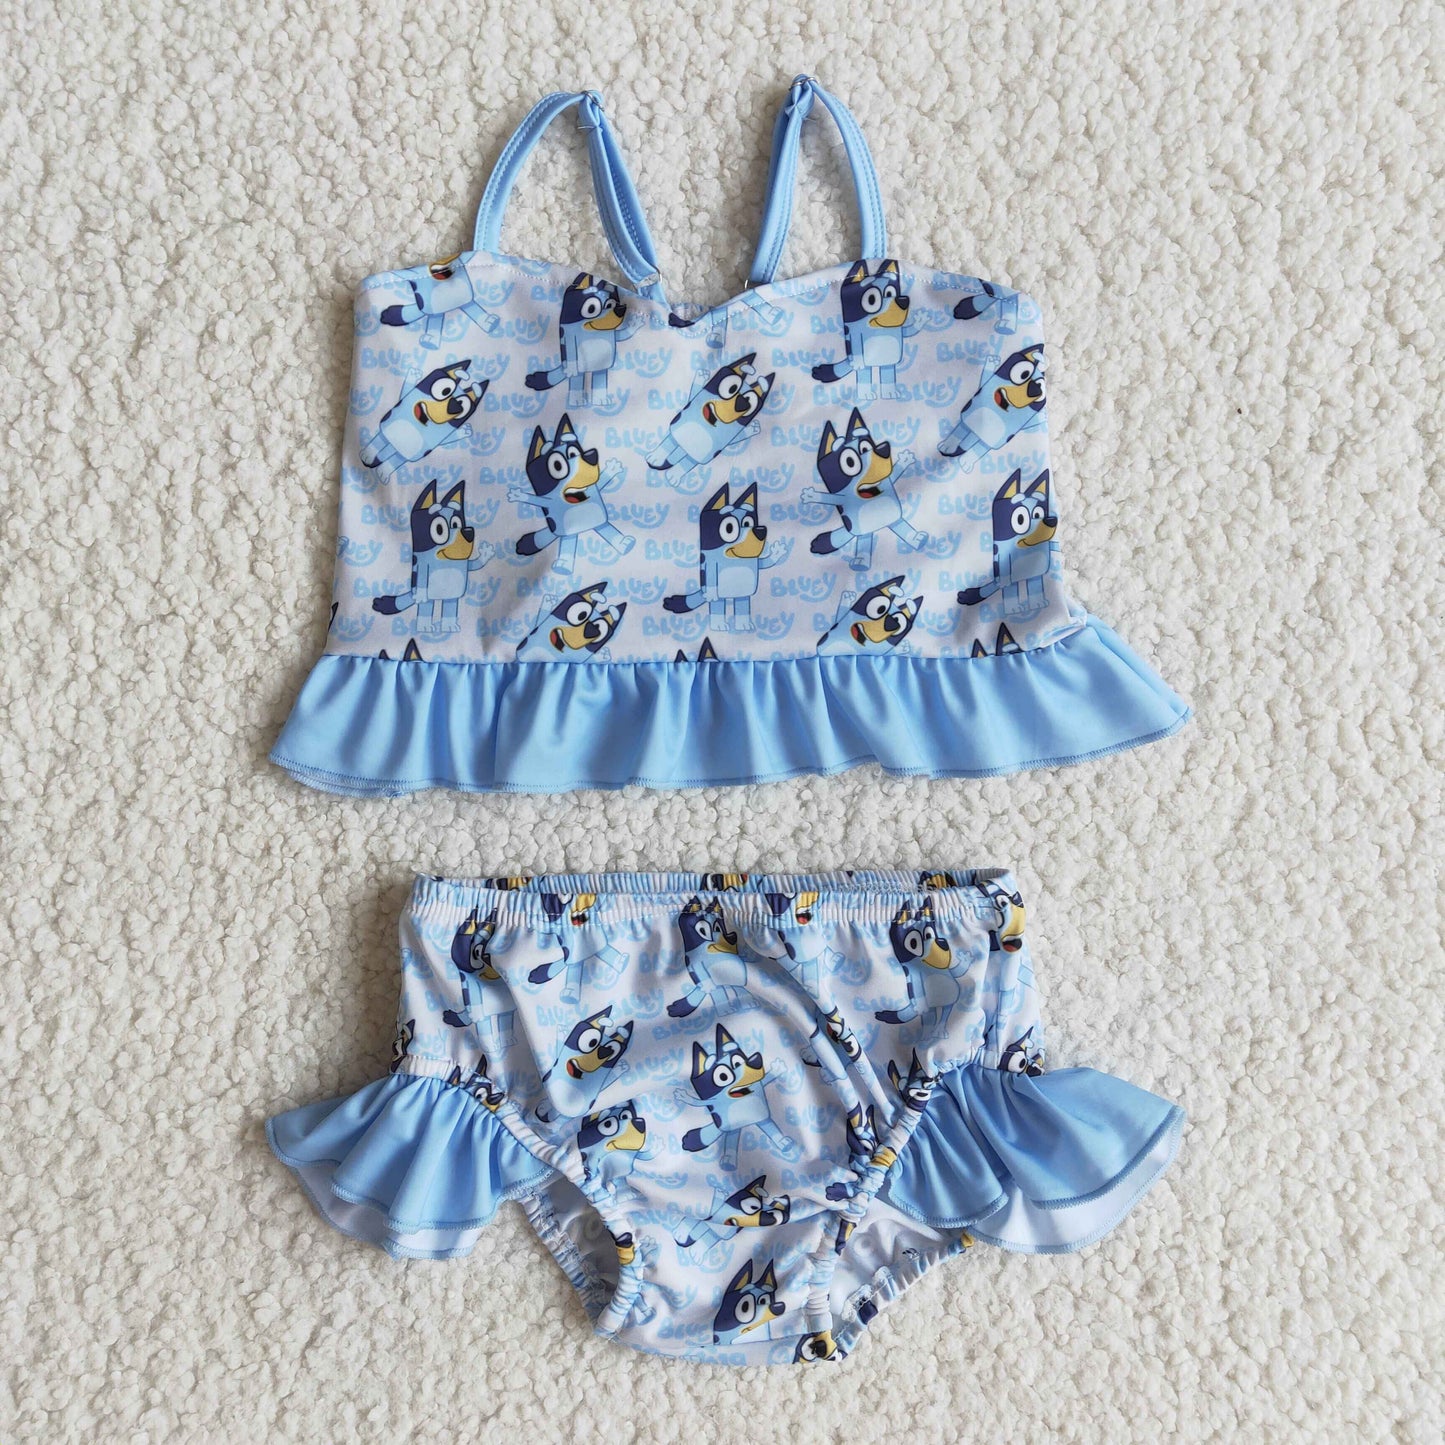 2pc blue girl’s swimsuit